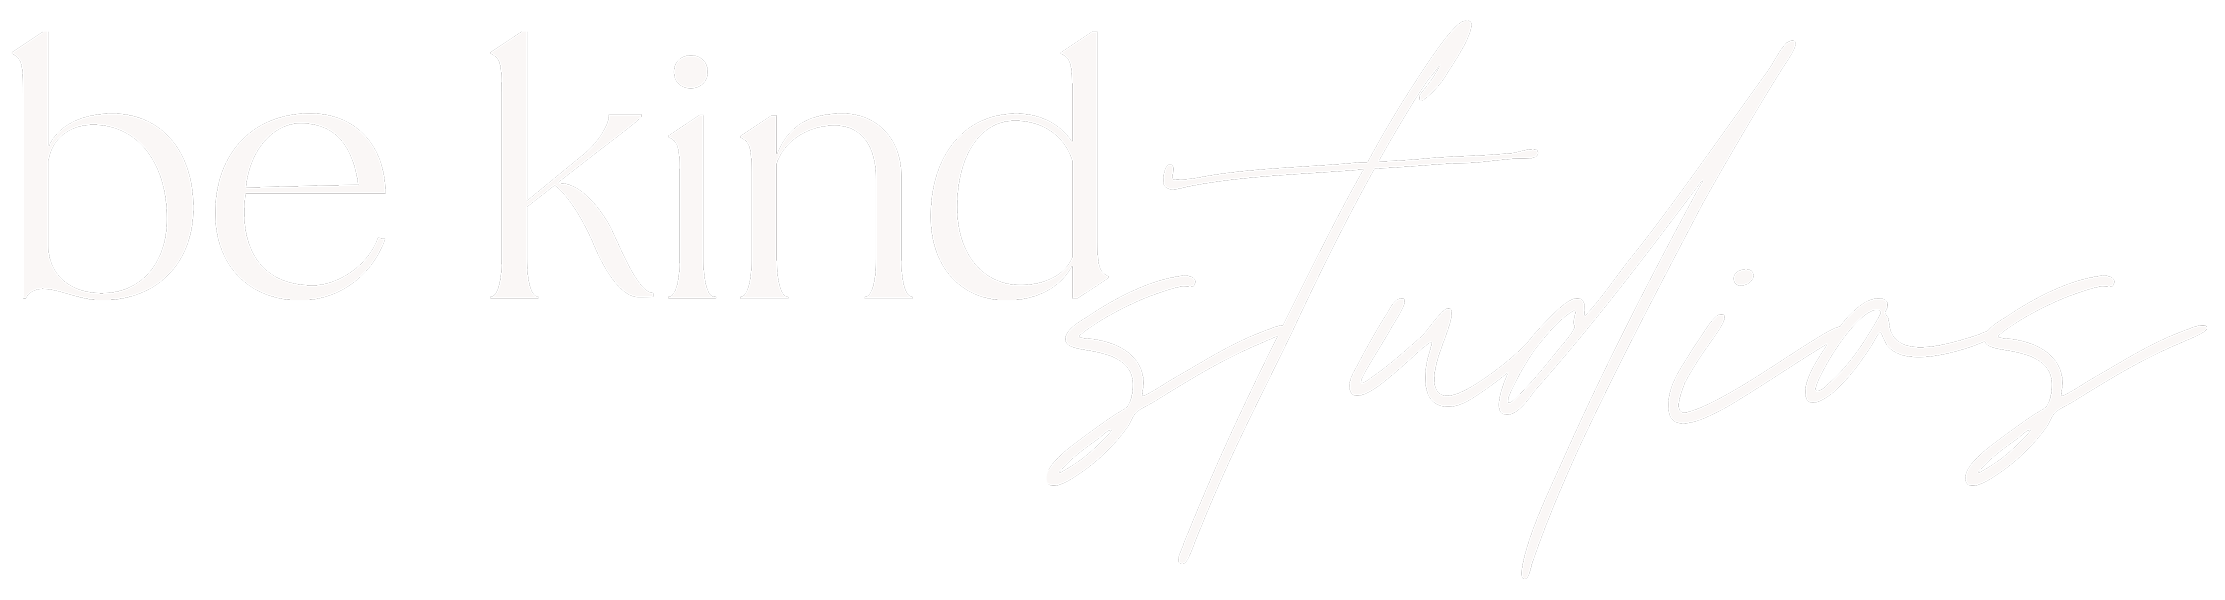 be kind studios logo